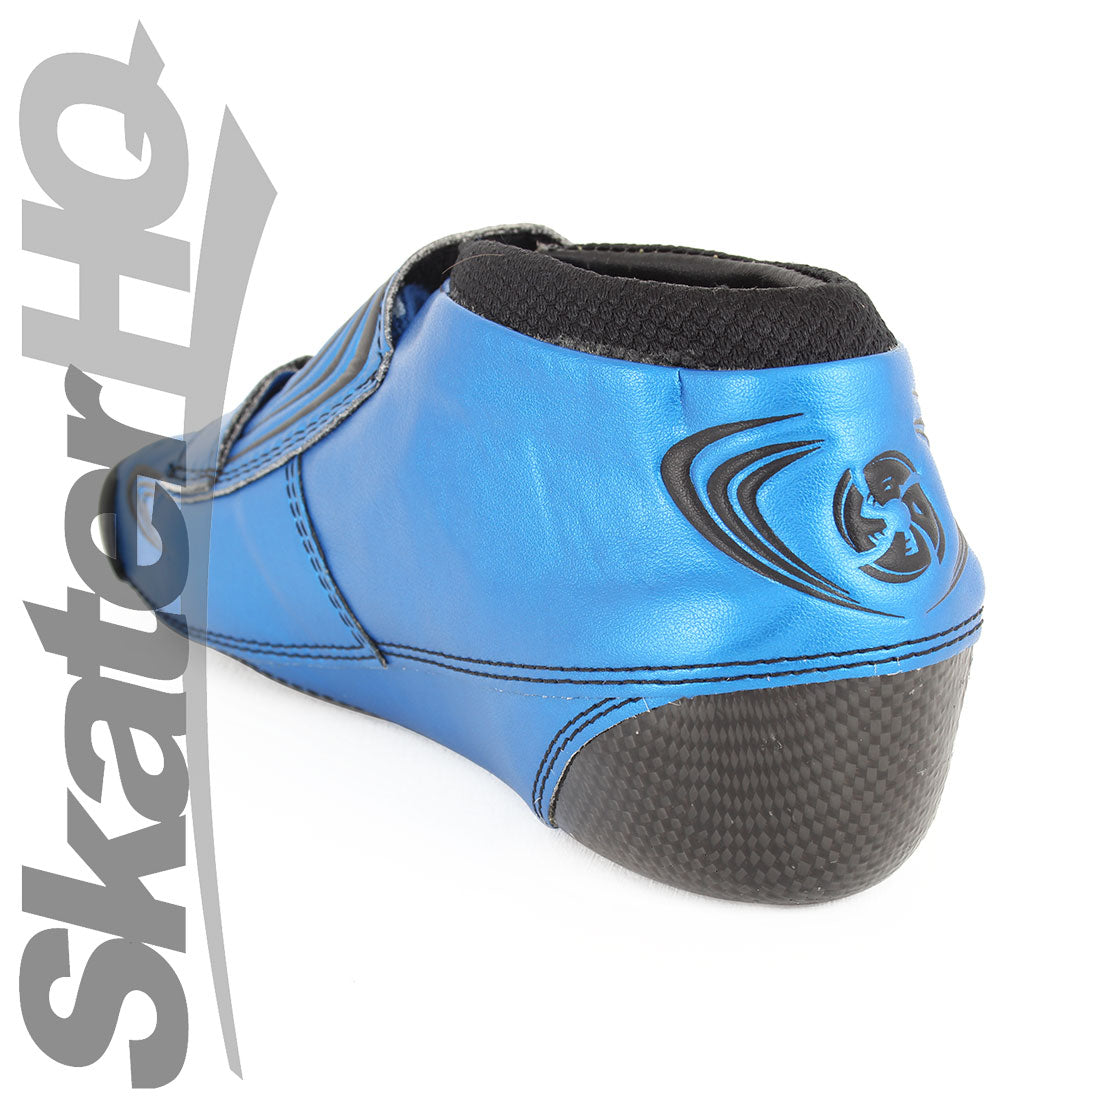 BONT Vaypor Custom Boot - Metallic Blue - 3.5US EU36.5 23.2cm Roller Skate Boots